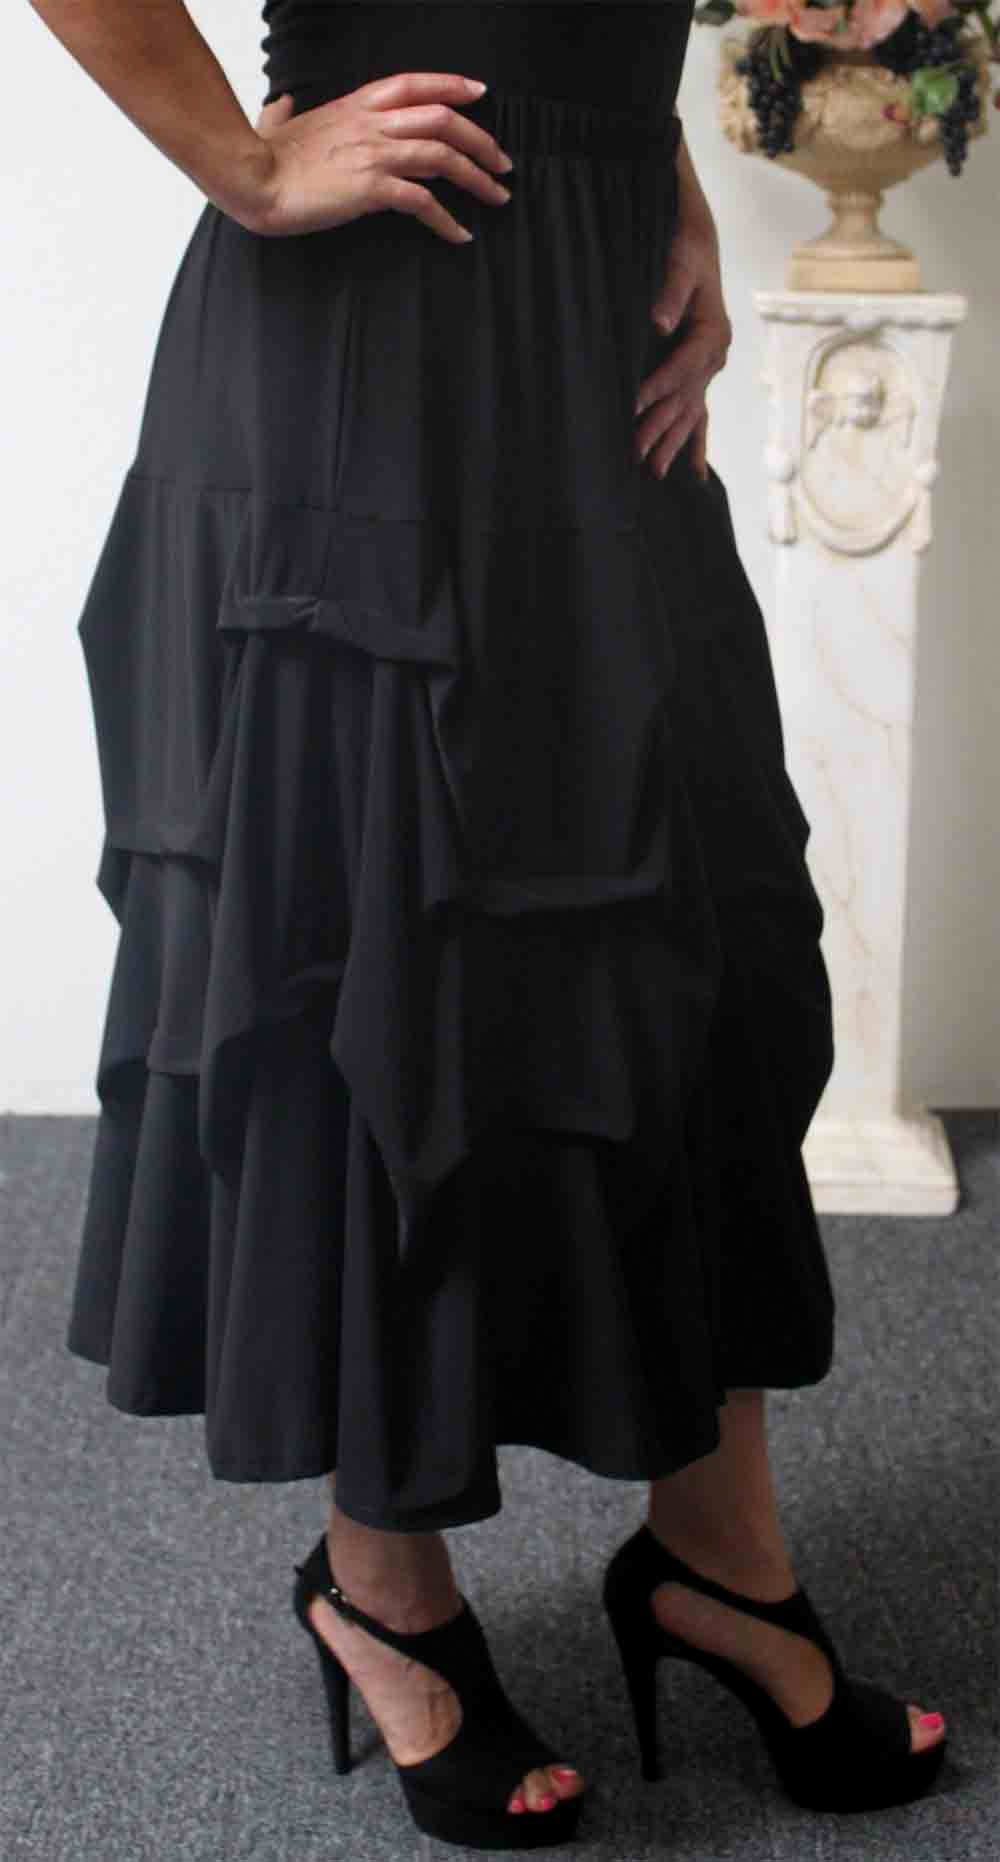 Arsty Skirt MIDI SKIRT,  Designer Lagenlook Skirt, Plus size skirt ,  Gathered skirt ,  Front and back ticjed skirt, Midi Skirt, Addition to our Travel Line with side pockets